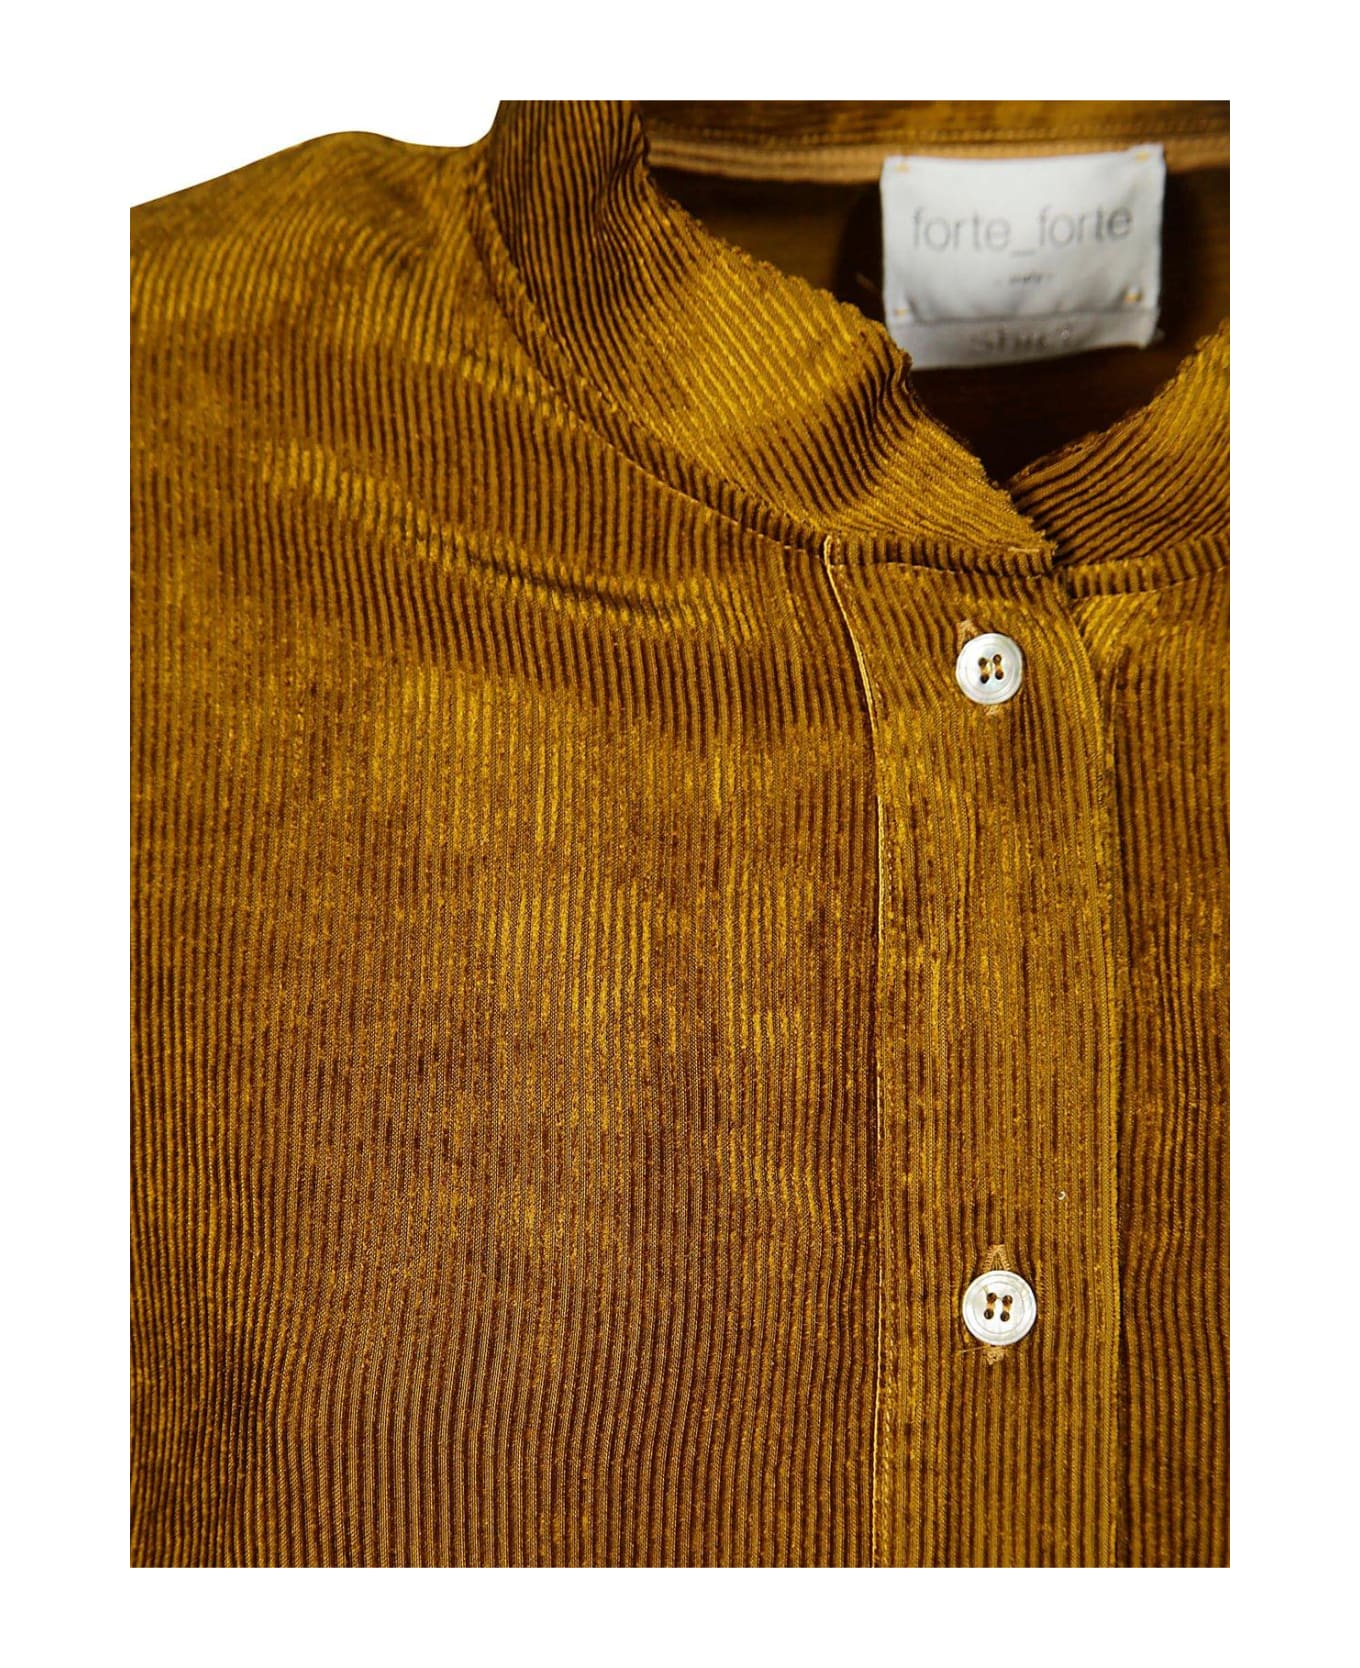 Forte_Forte Buttoned Sleeved Shirt - Beige ジャケット